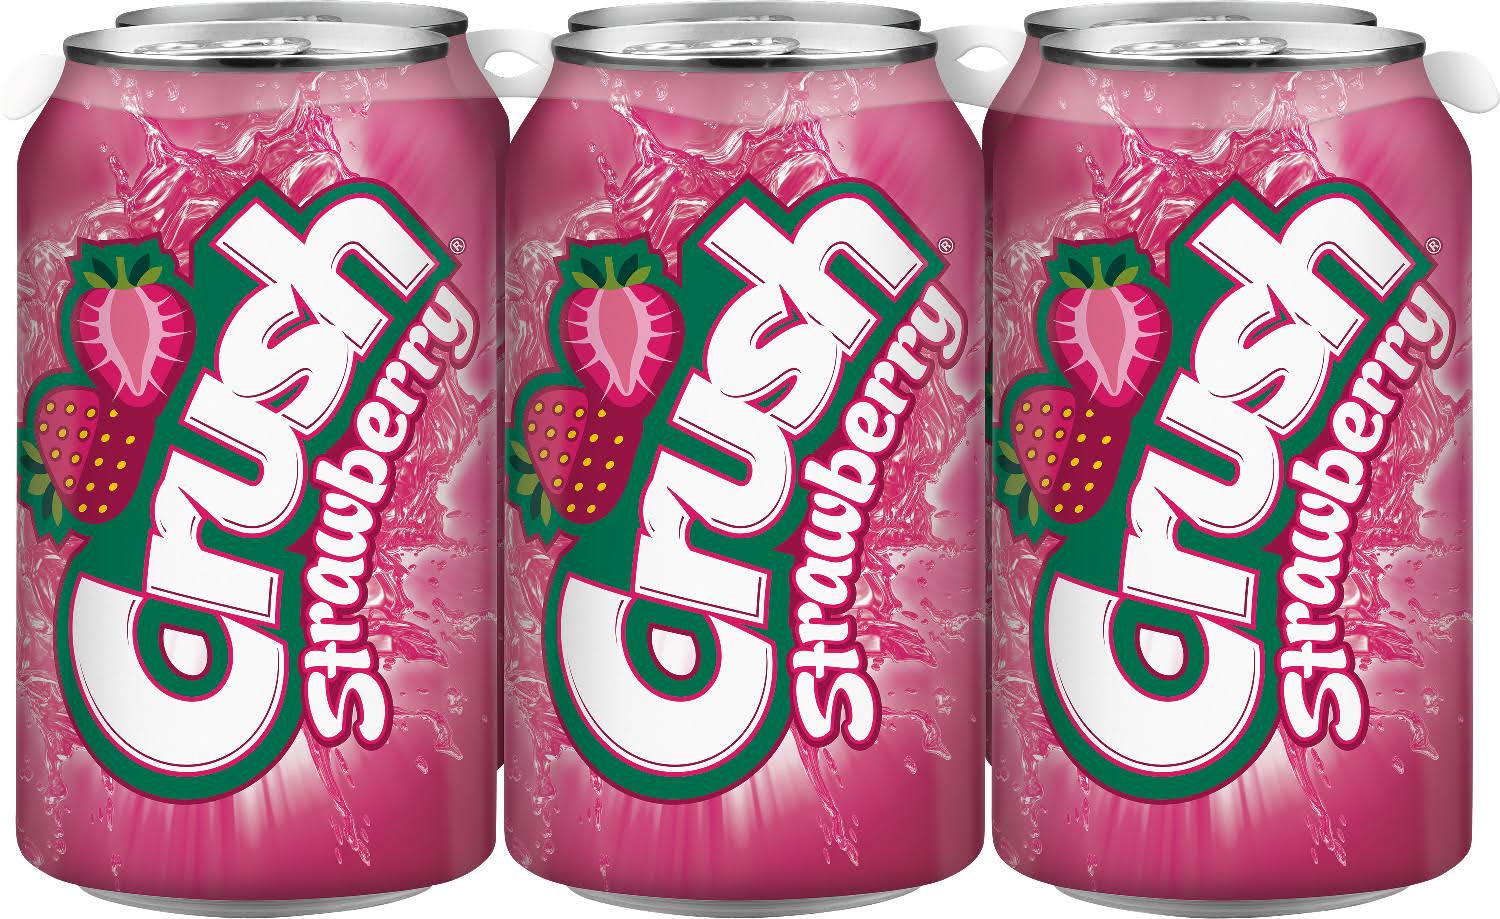 Crush Strawberry Soda - 355ml